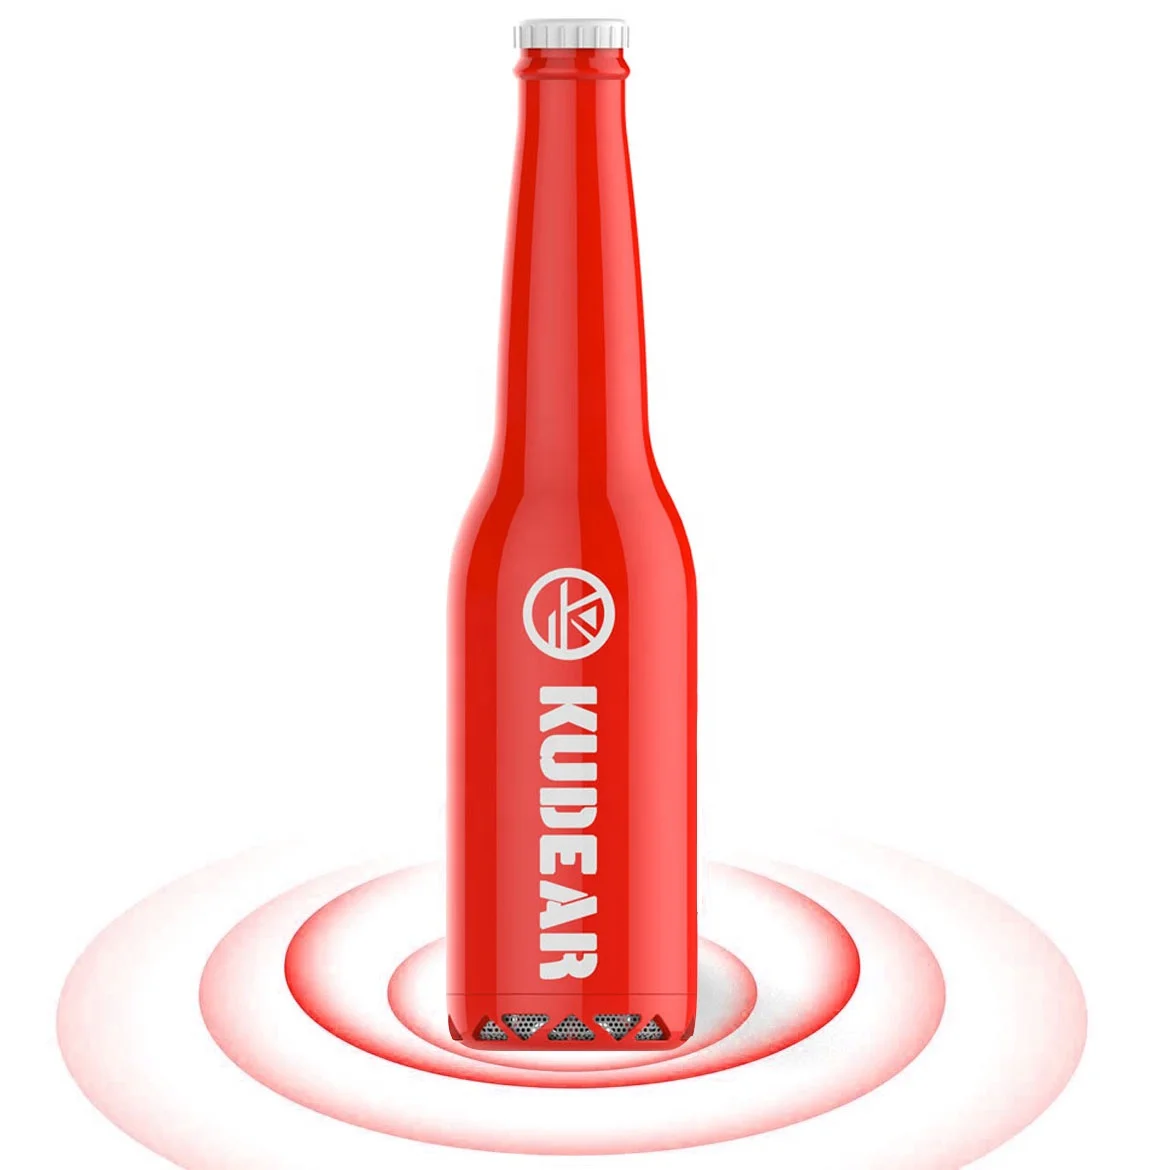 

2022 Factory New Promotion Gift 3D Surround Sound Portable Beer Bottle TWS BT Wireless Speaker